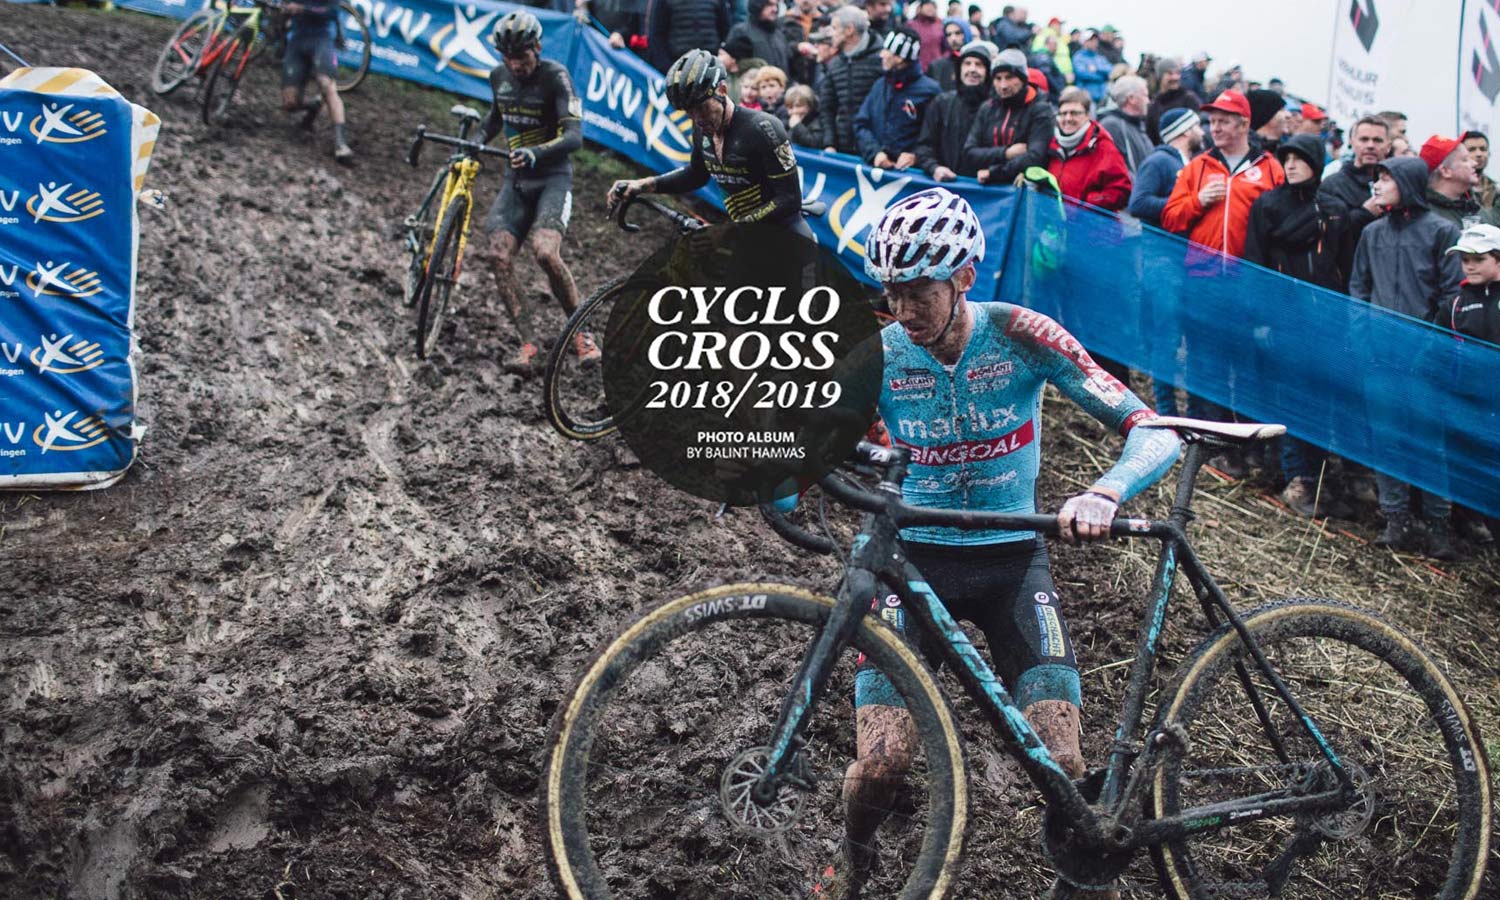 Cyclocross 2018/2019 special edition, Balint Hamvas reviews another CX season